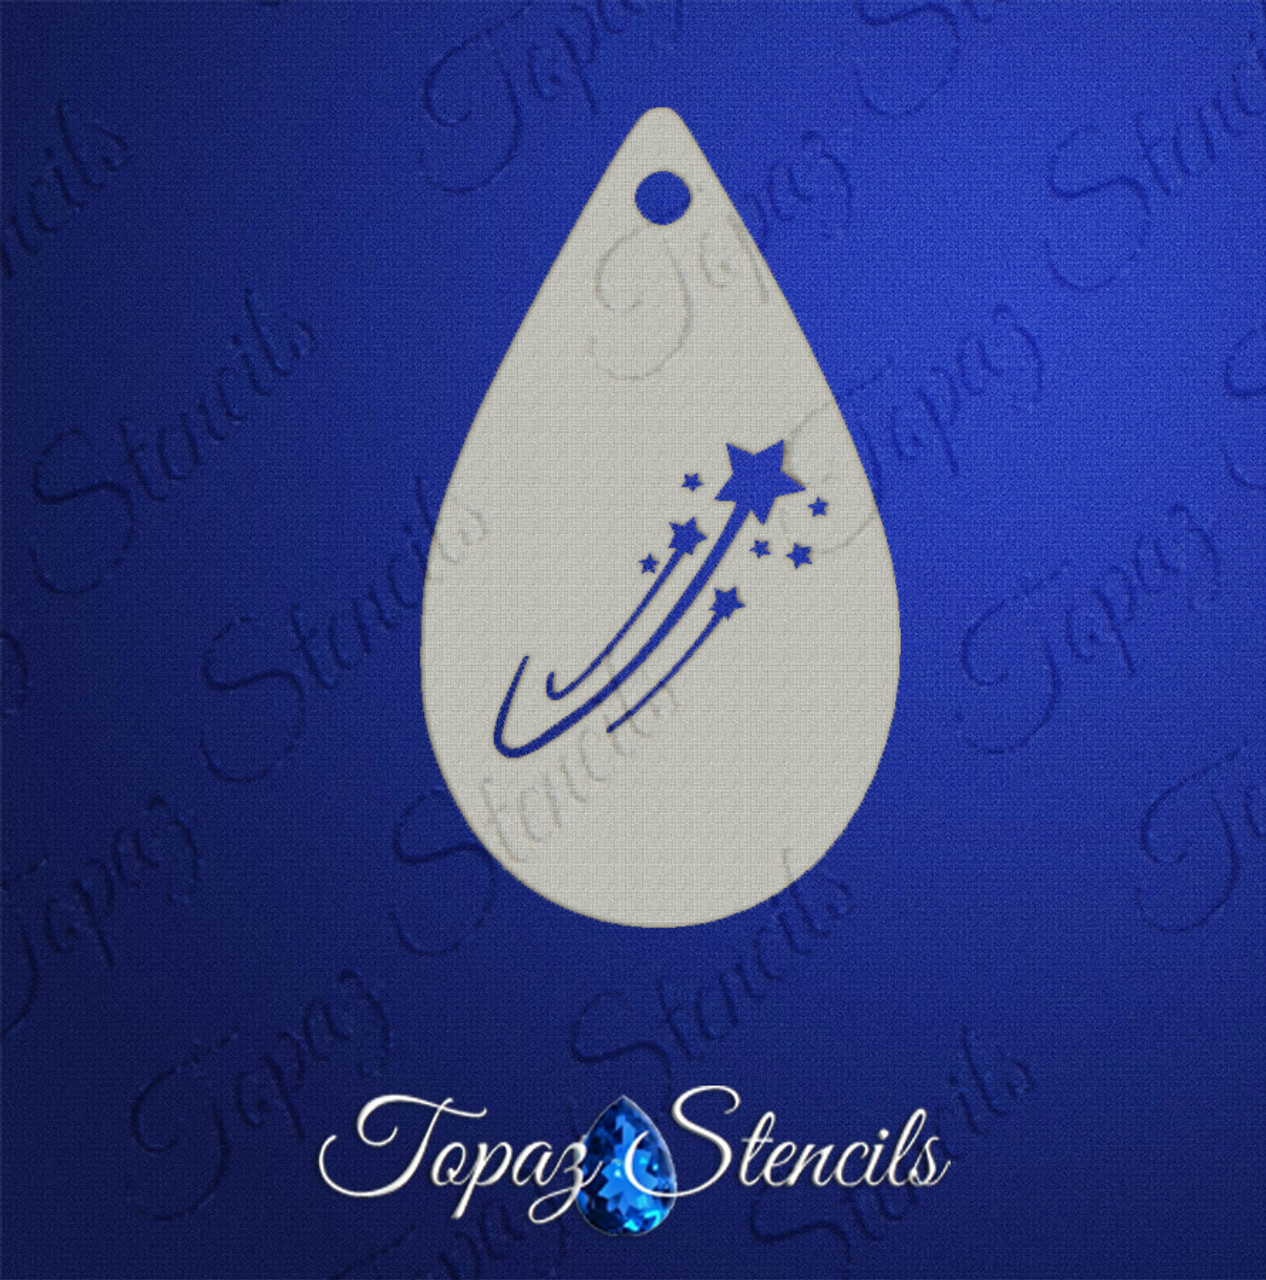 Shooting Stars - Topaz Stencils